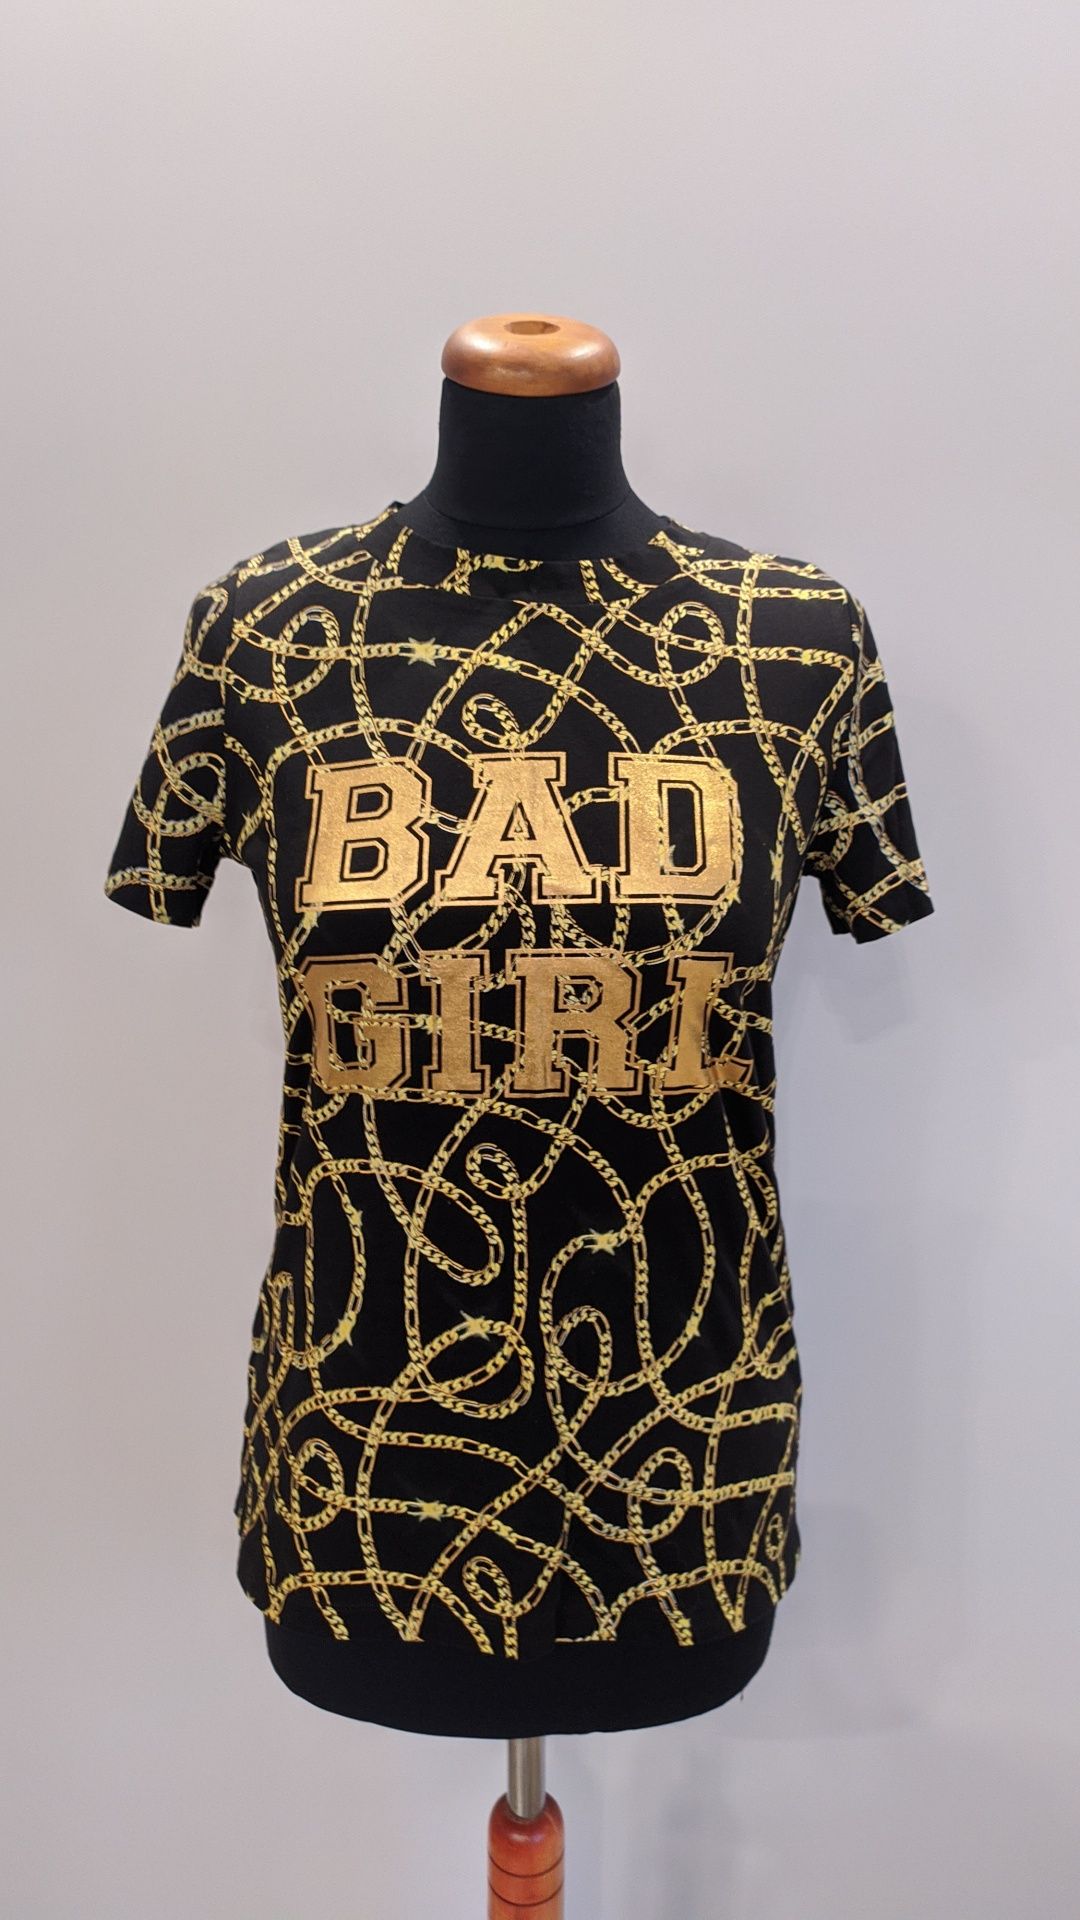 Koszulka Bad Girl nowa bez oryginalnej metki